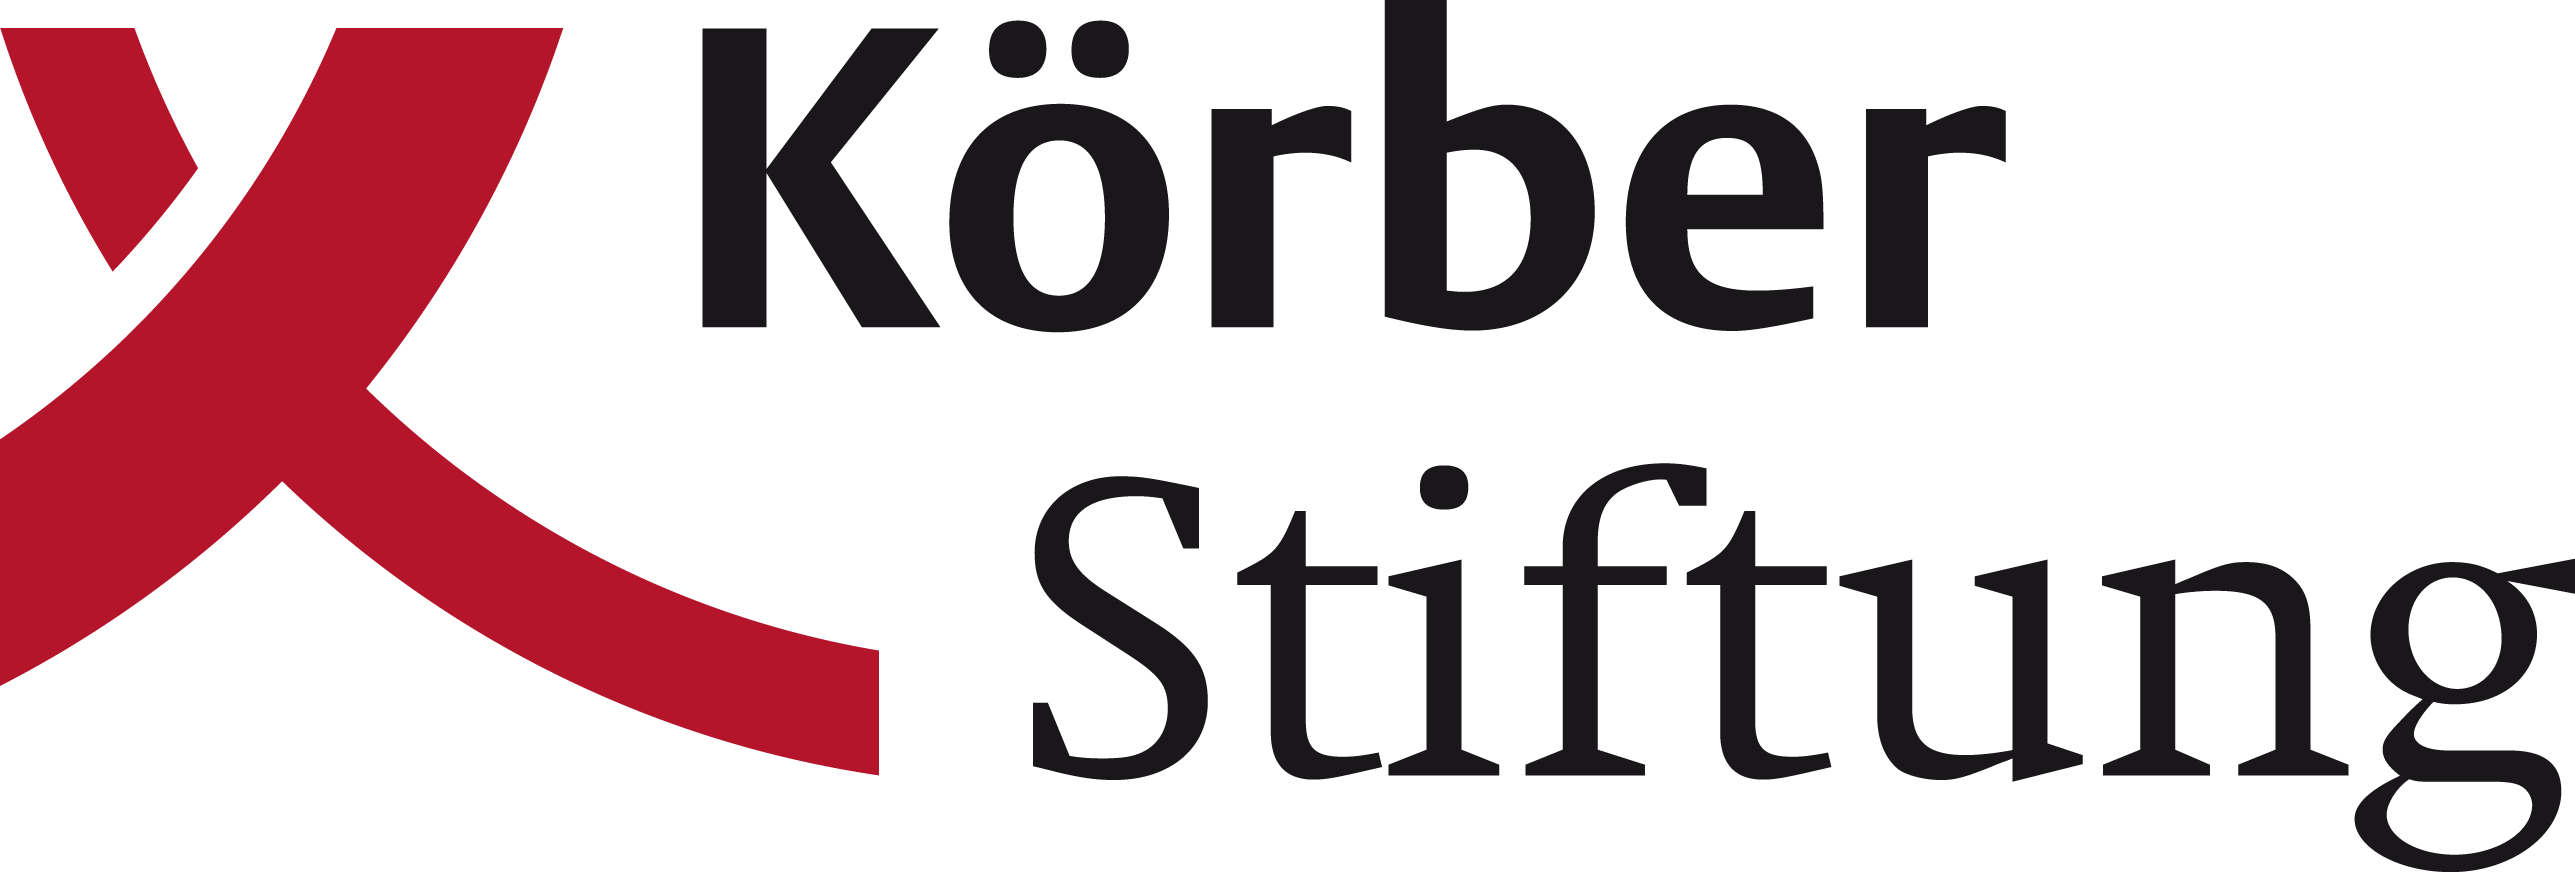 Koerber Stiftung